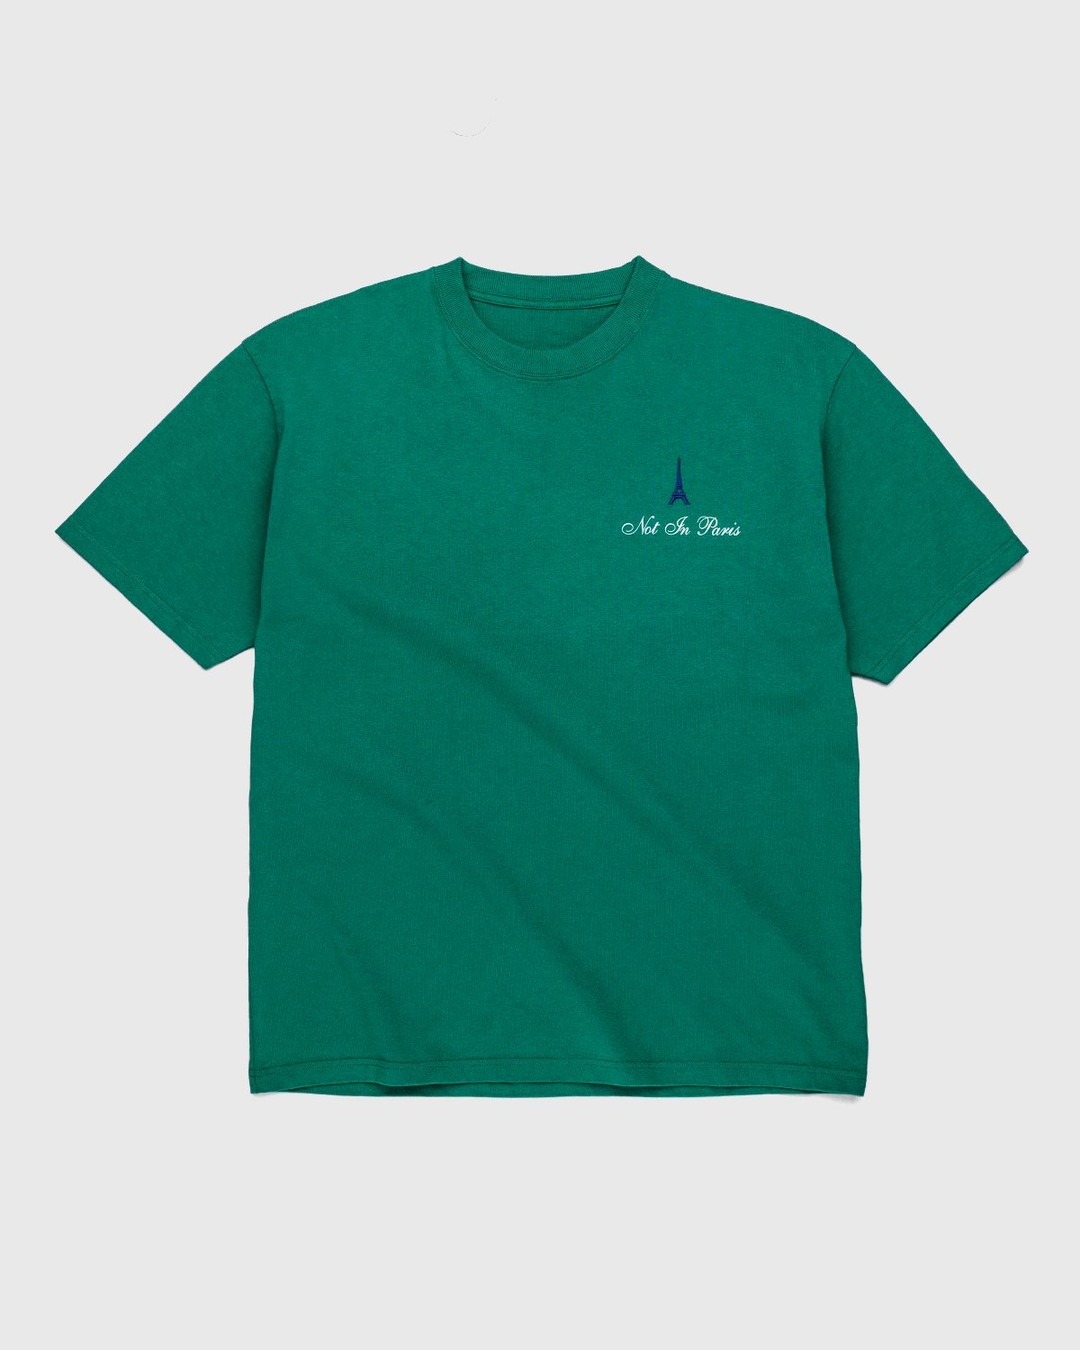 Highsnobiety – Not in Paris 3 T-Shirt Green - T-Shirts - Green - Image 2